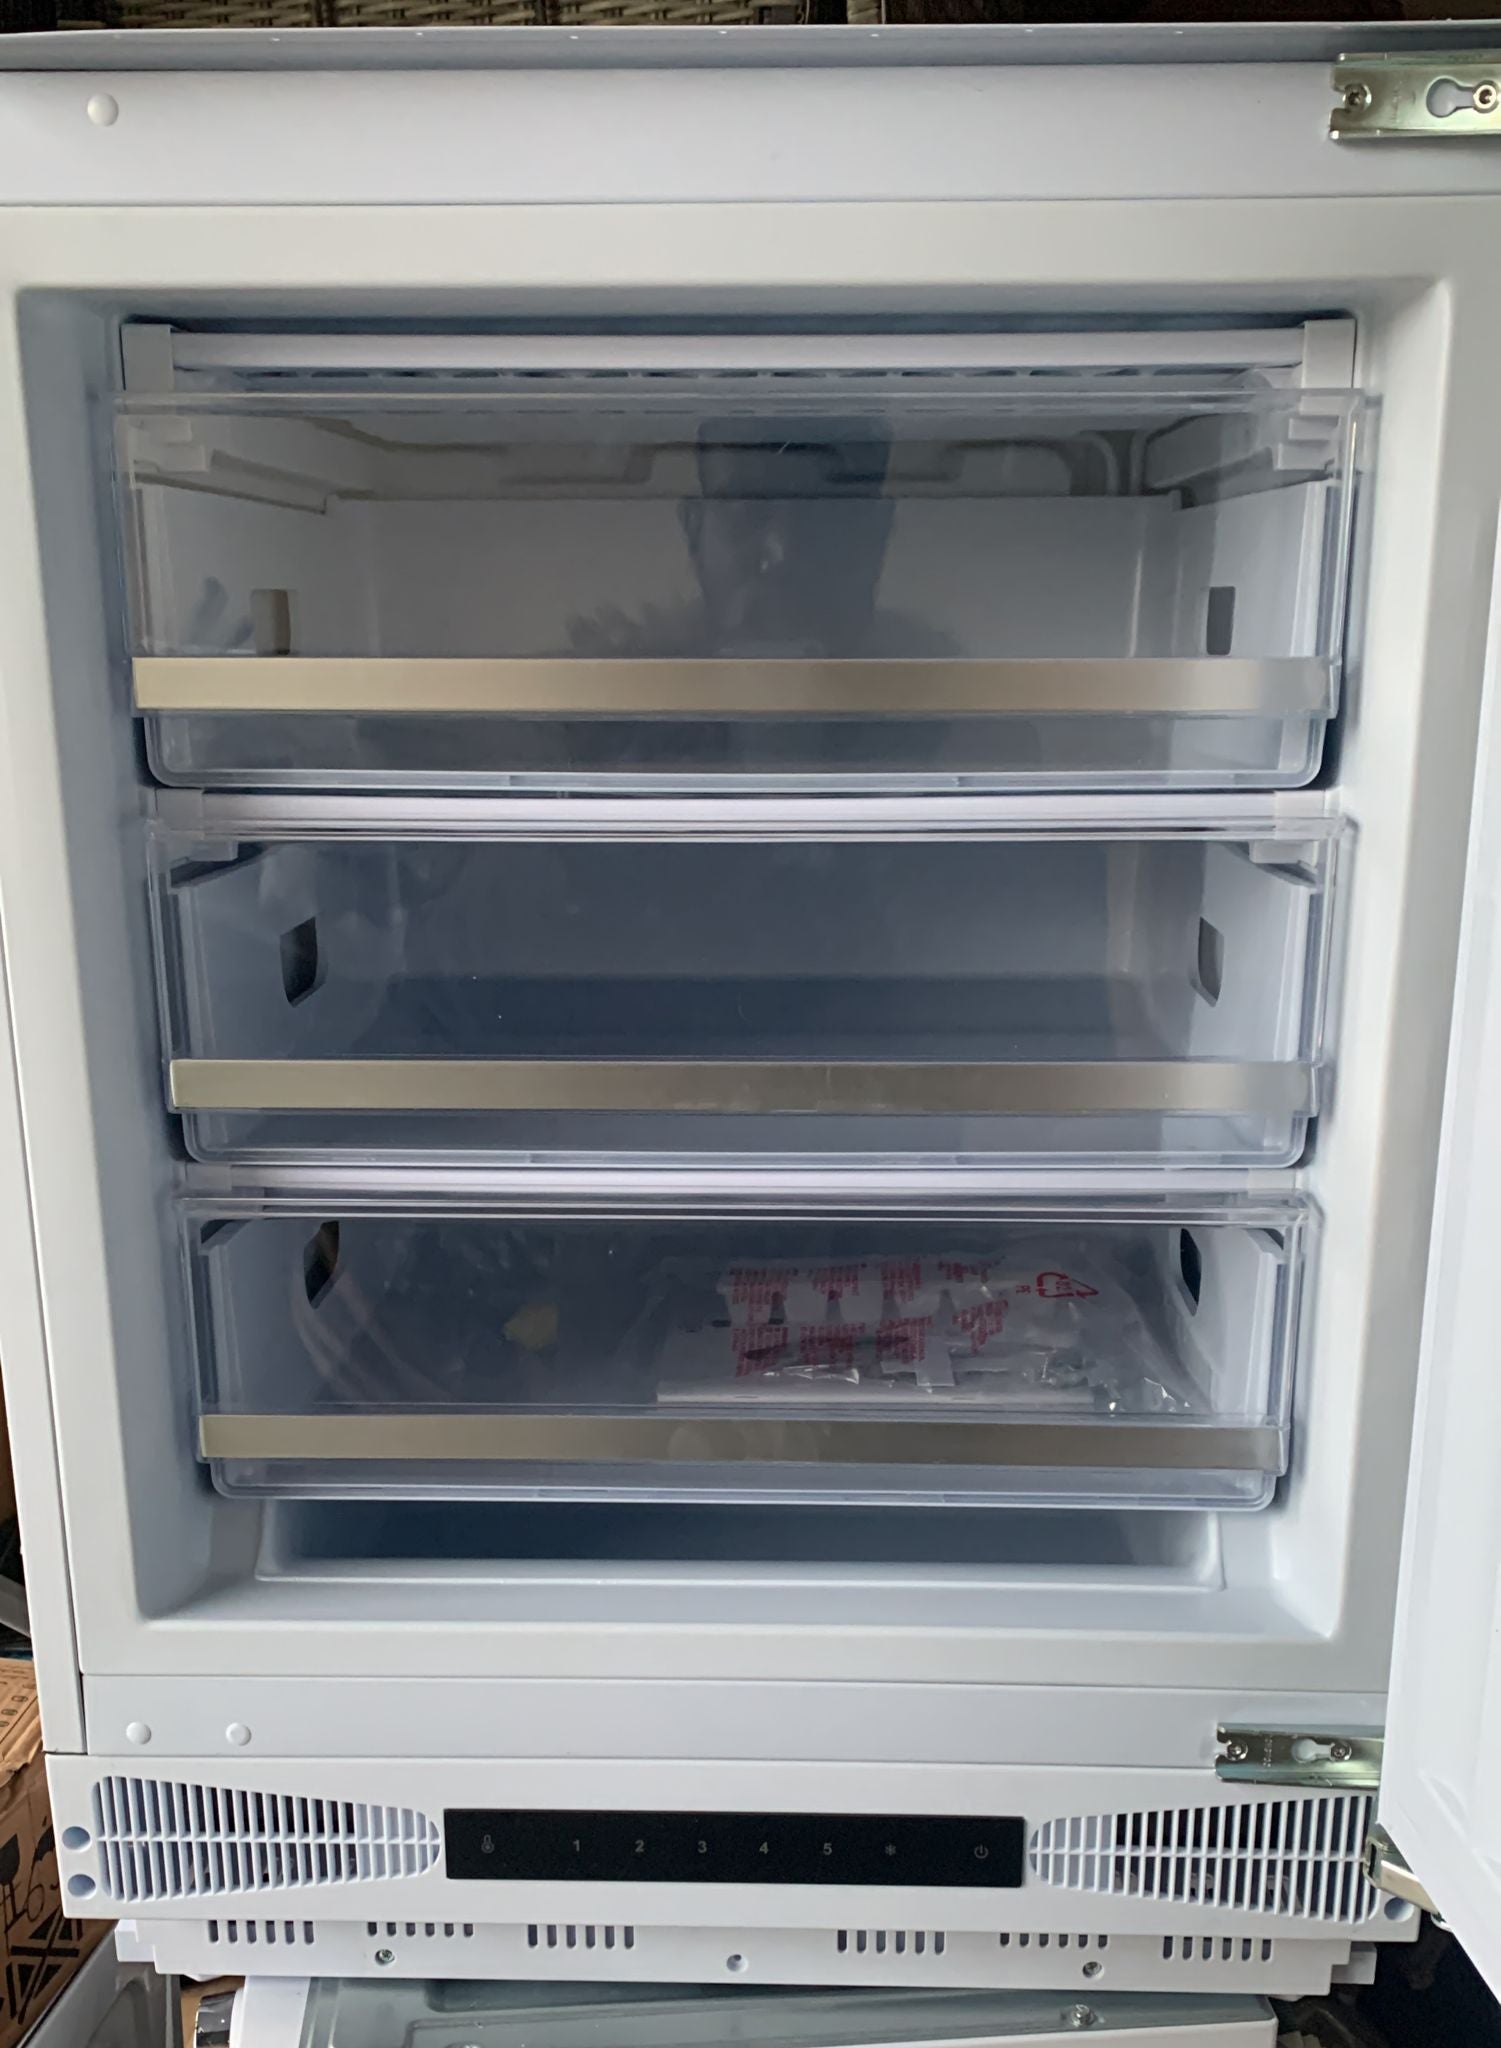 BUFZUK Integrated Manual defrost Freezer - Gloss white- 9569